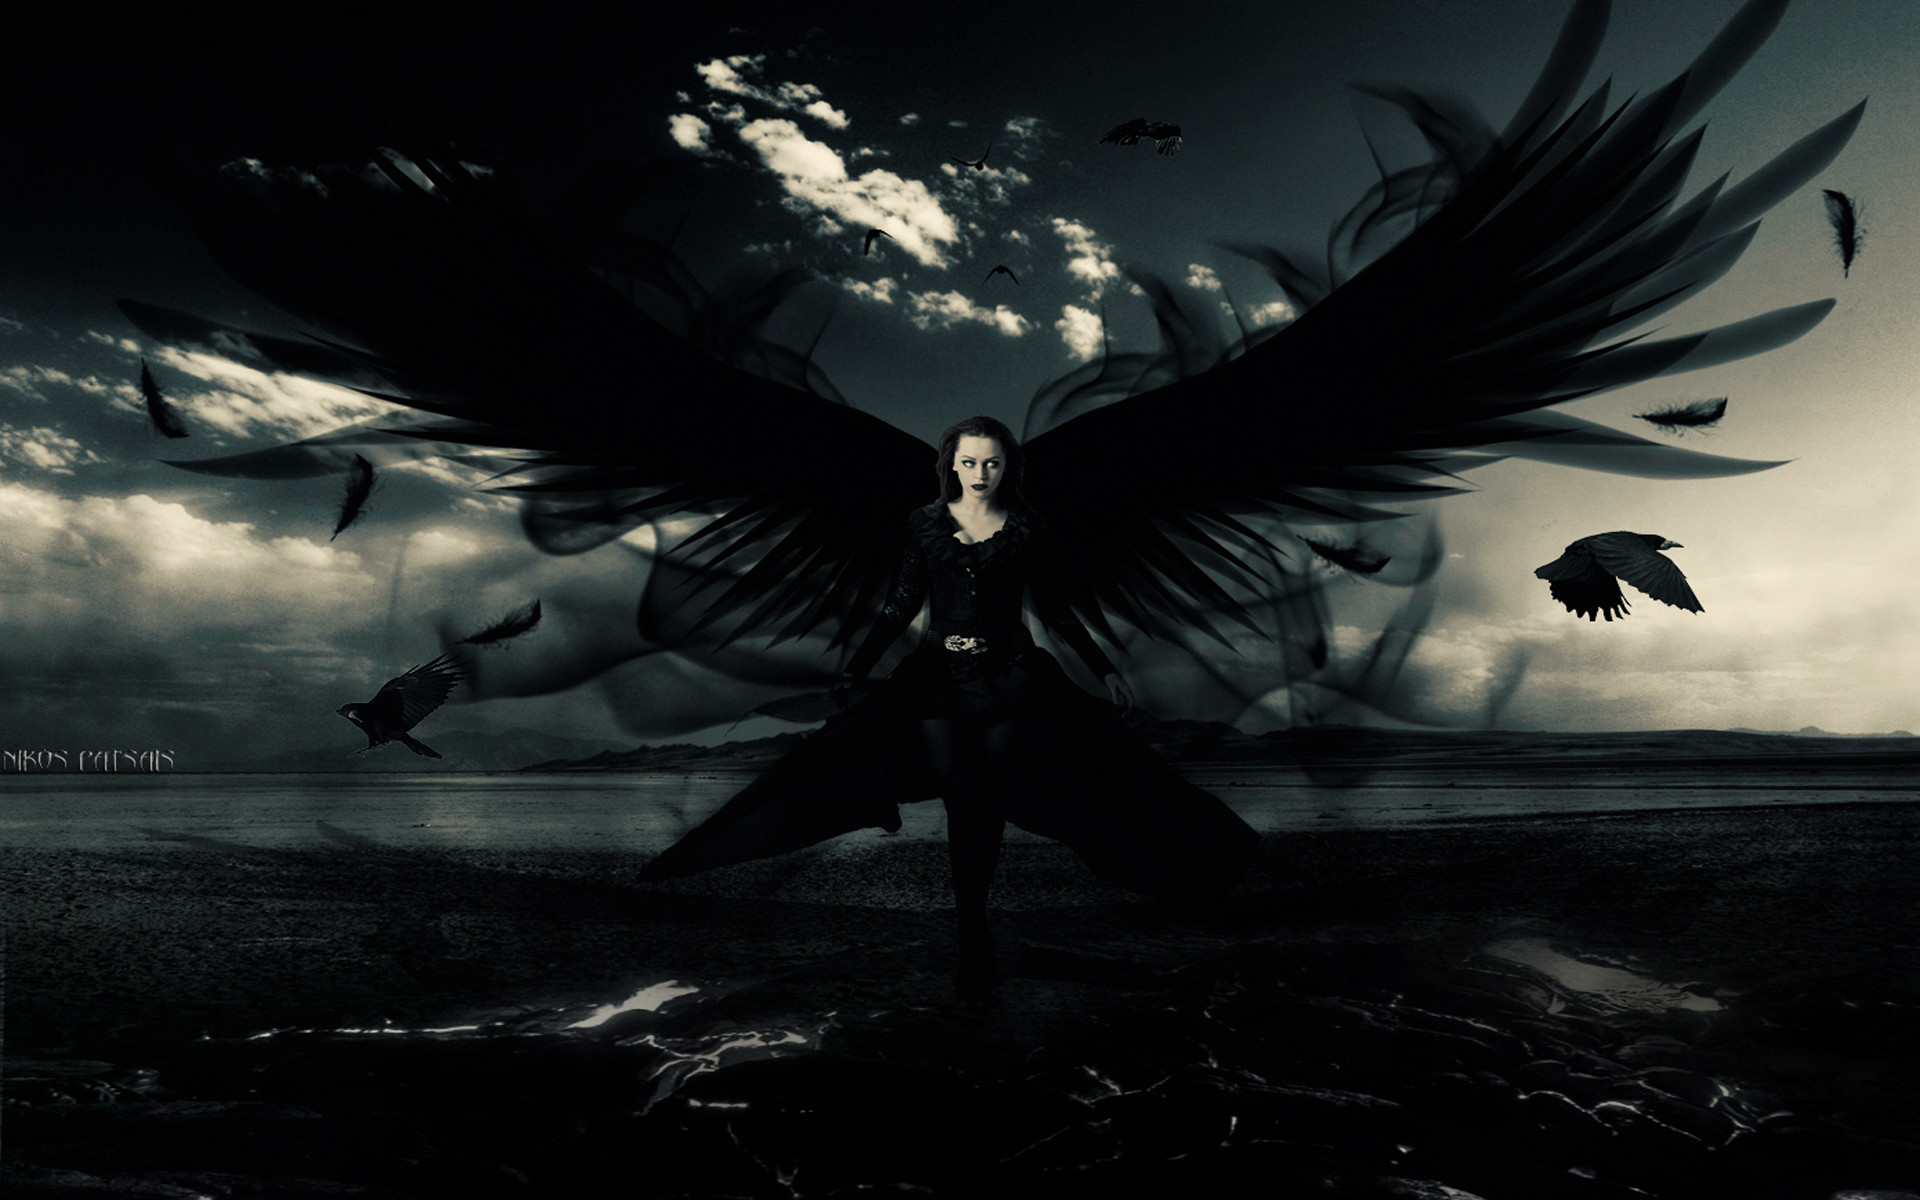 dark angel wallpaper,darkness,cg artwork,sky,wing,goth subculture